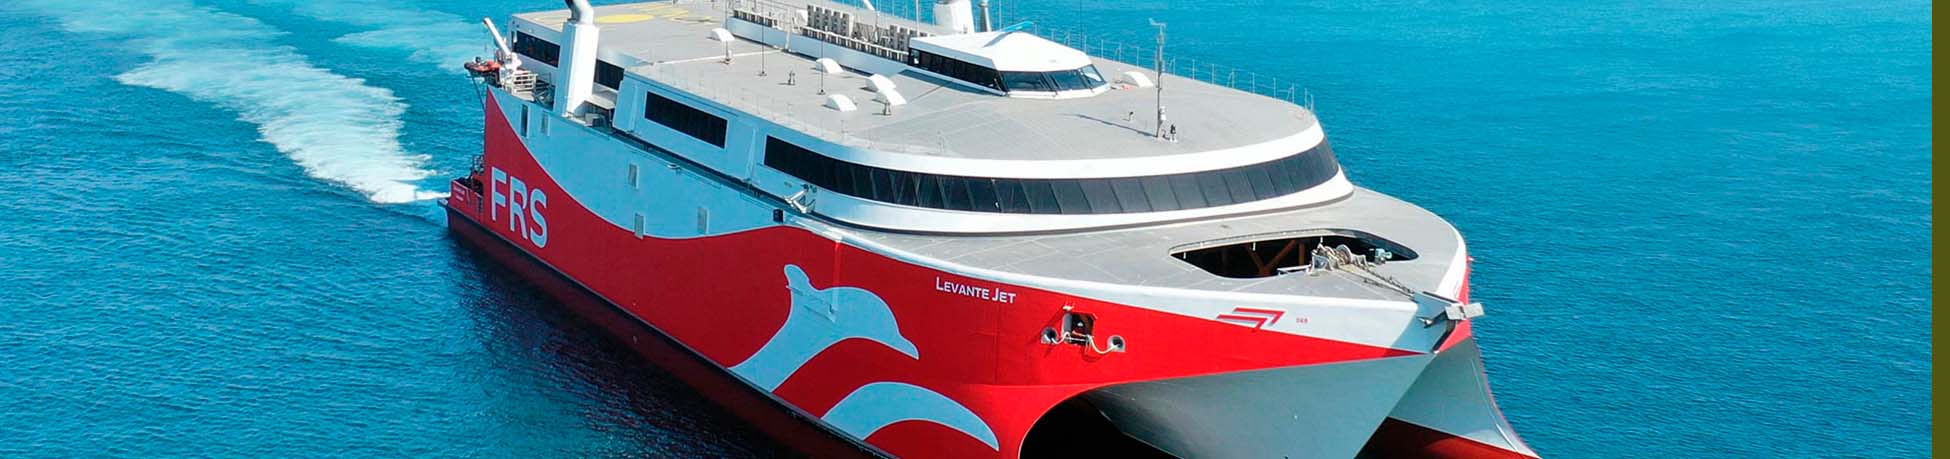 Resource image of the destination port Tanger Med for the ferry route Algeciras - Tanger Med